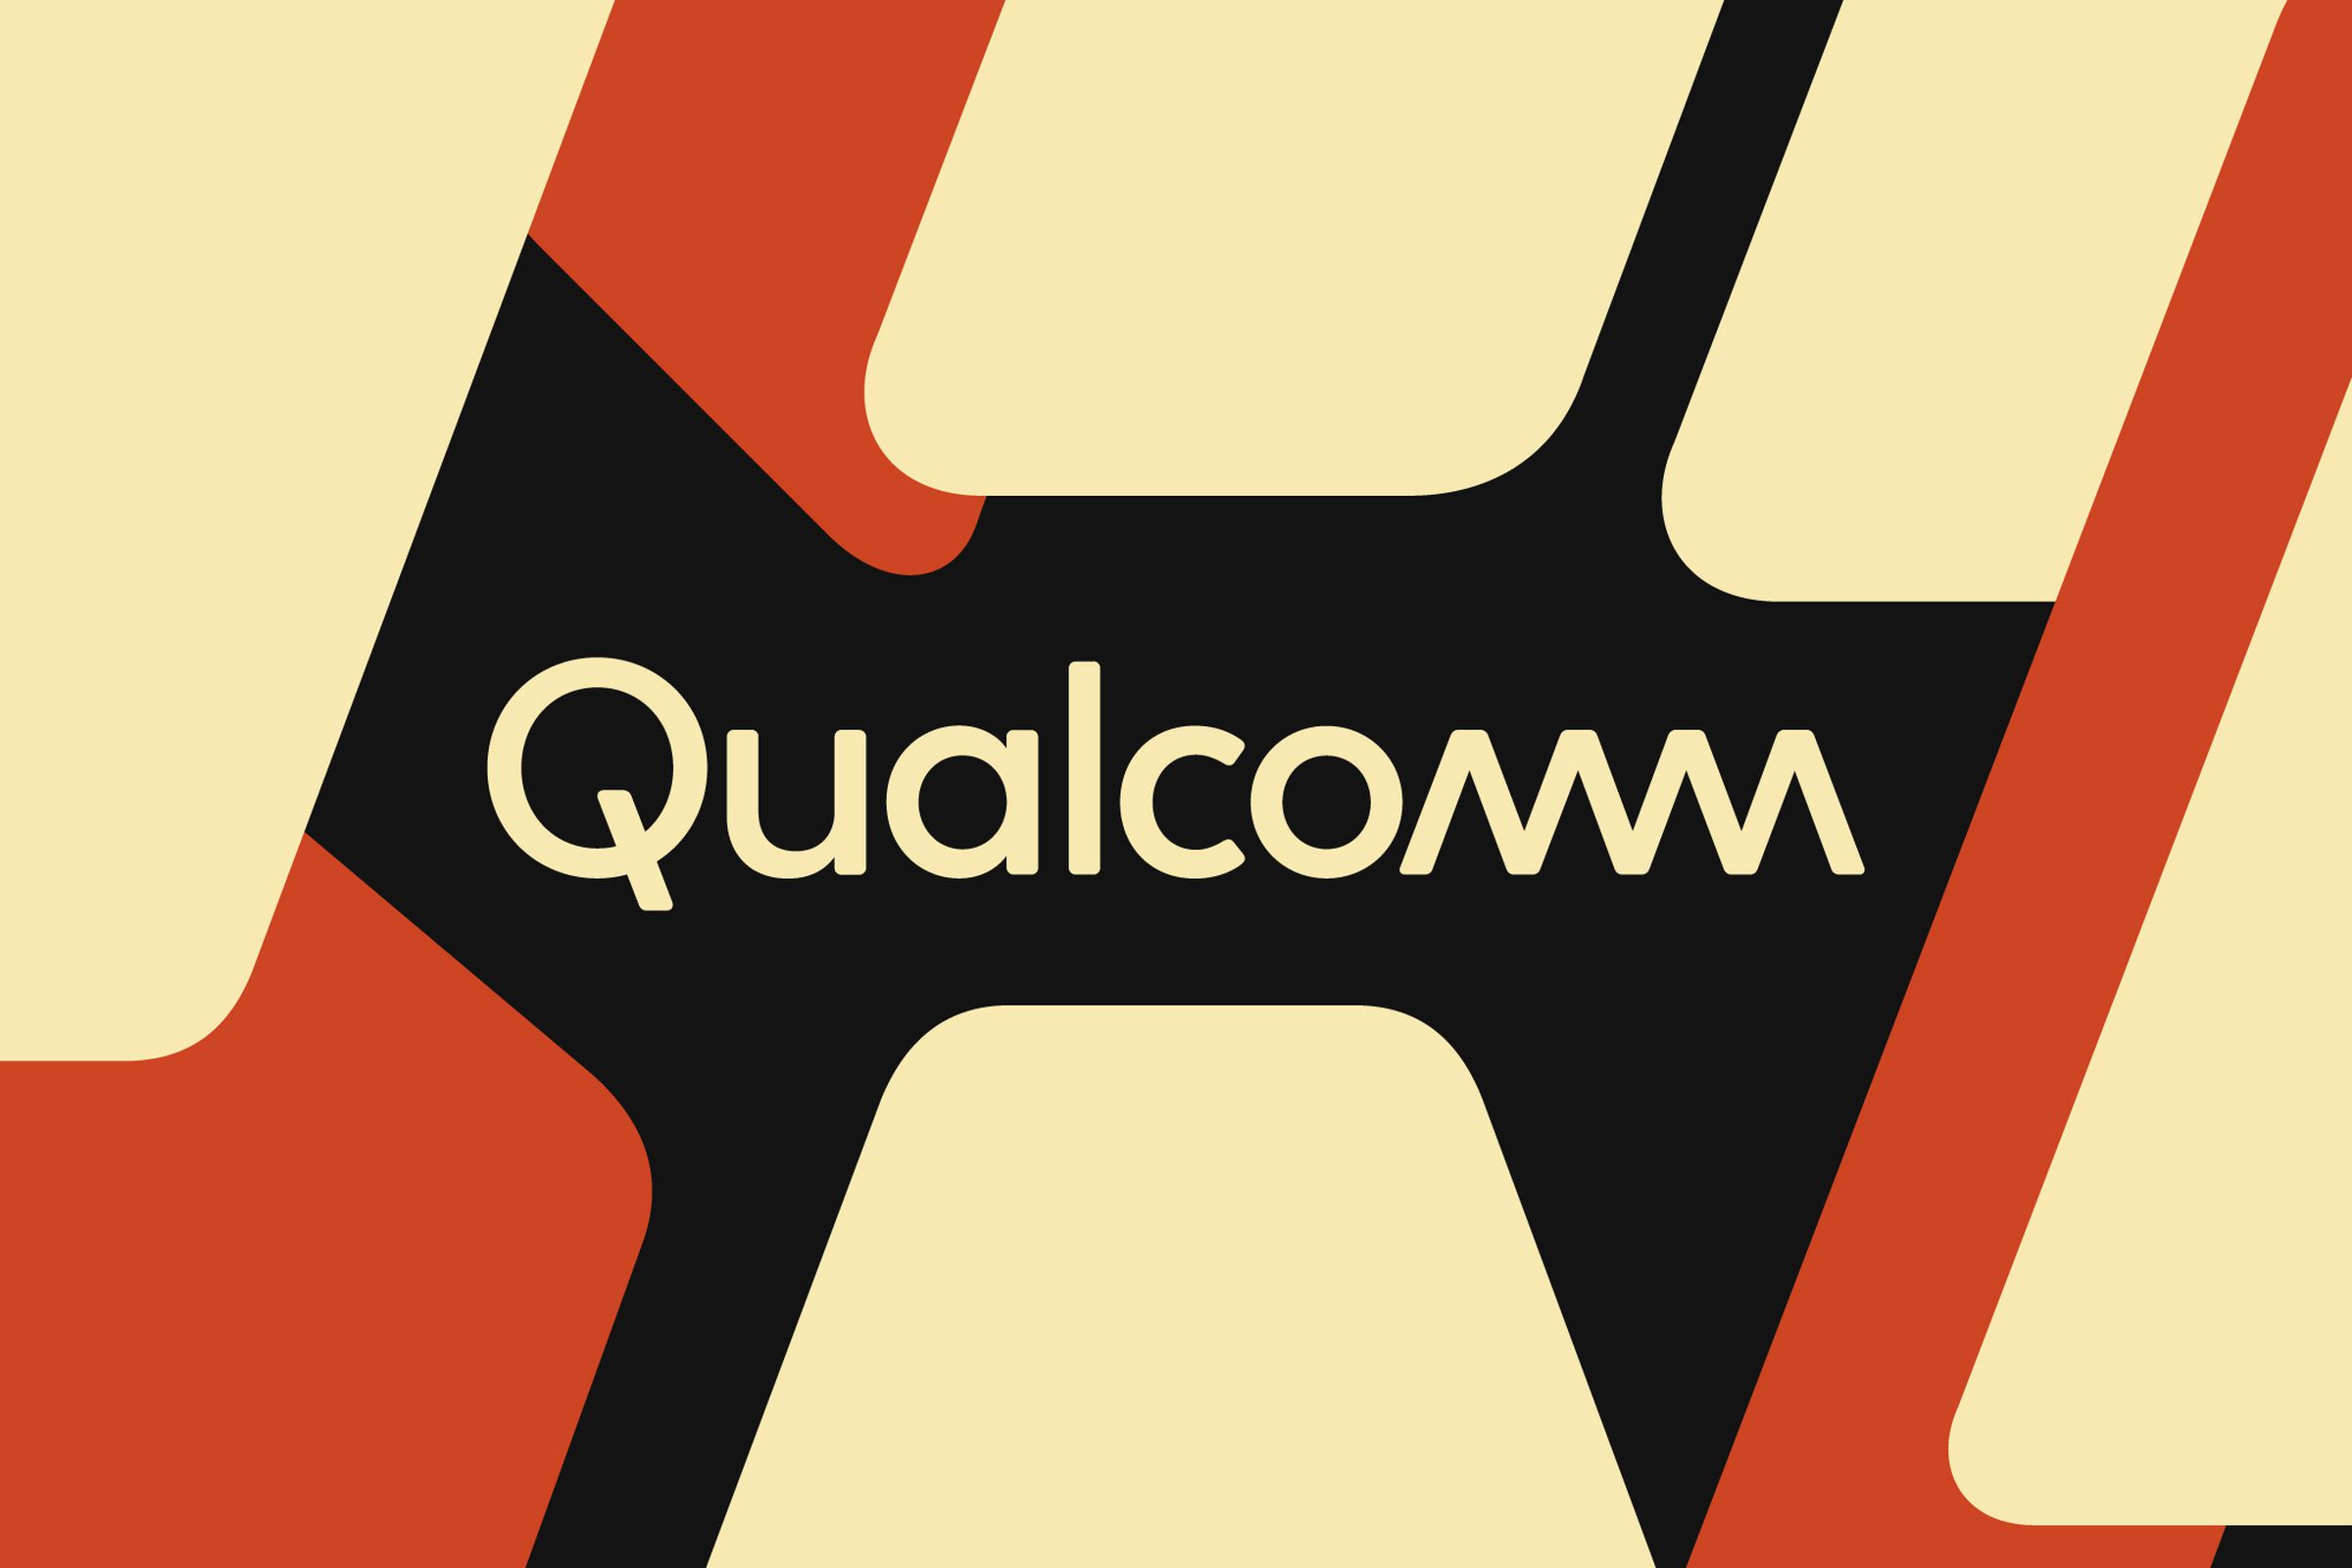 Qualcomm logo over a multicolored illustration